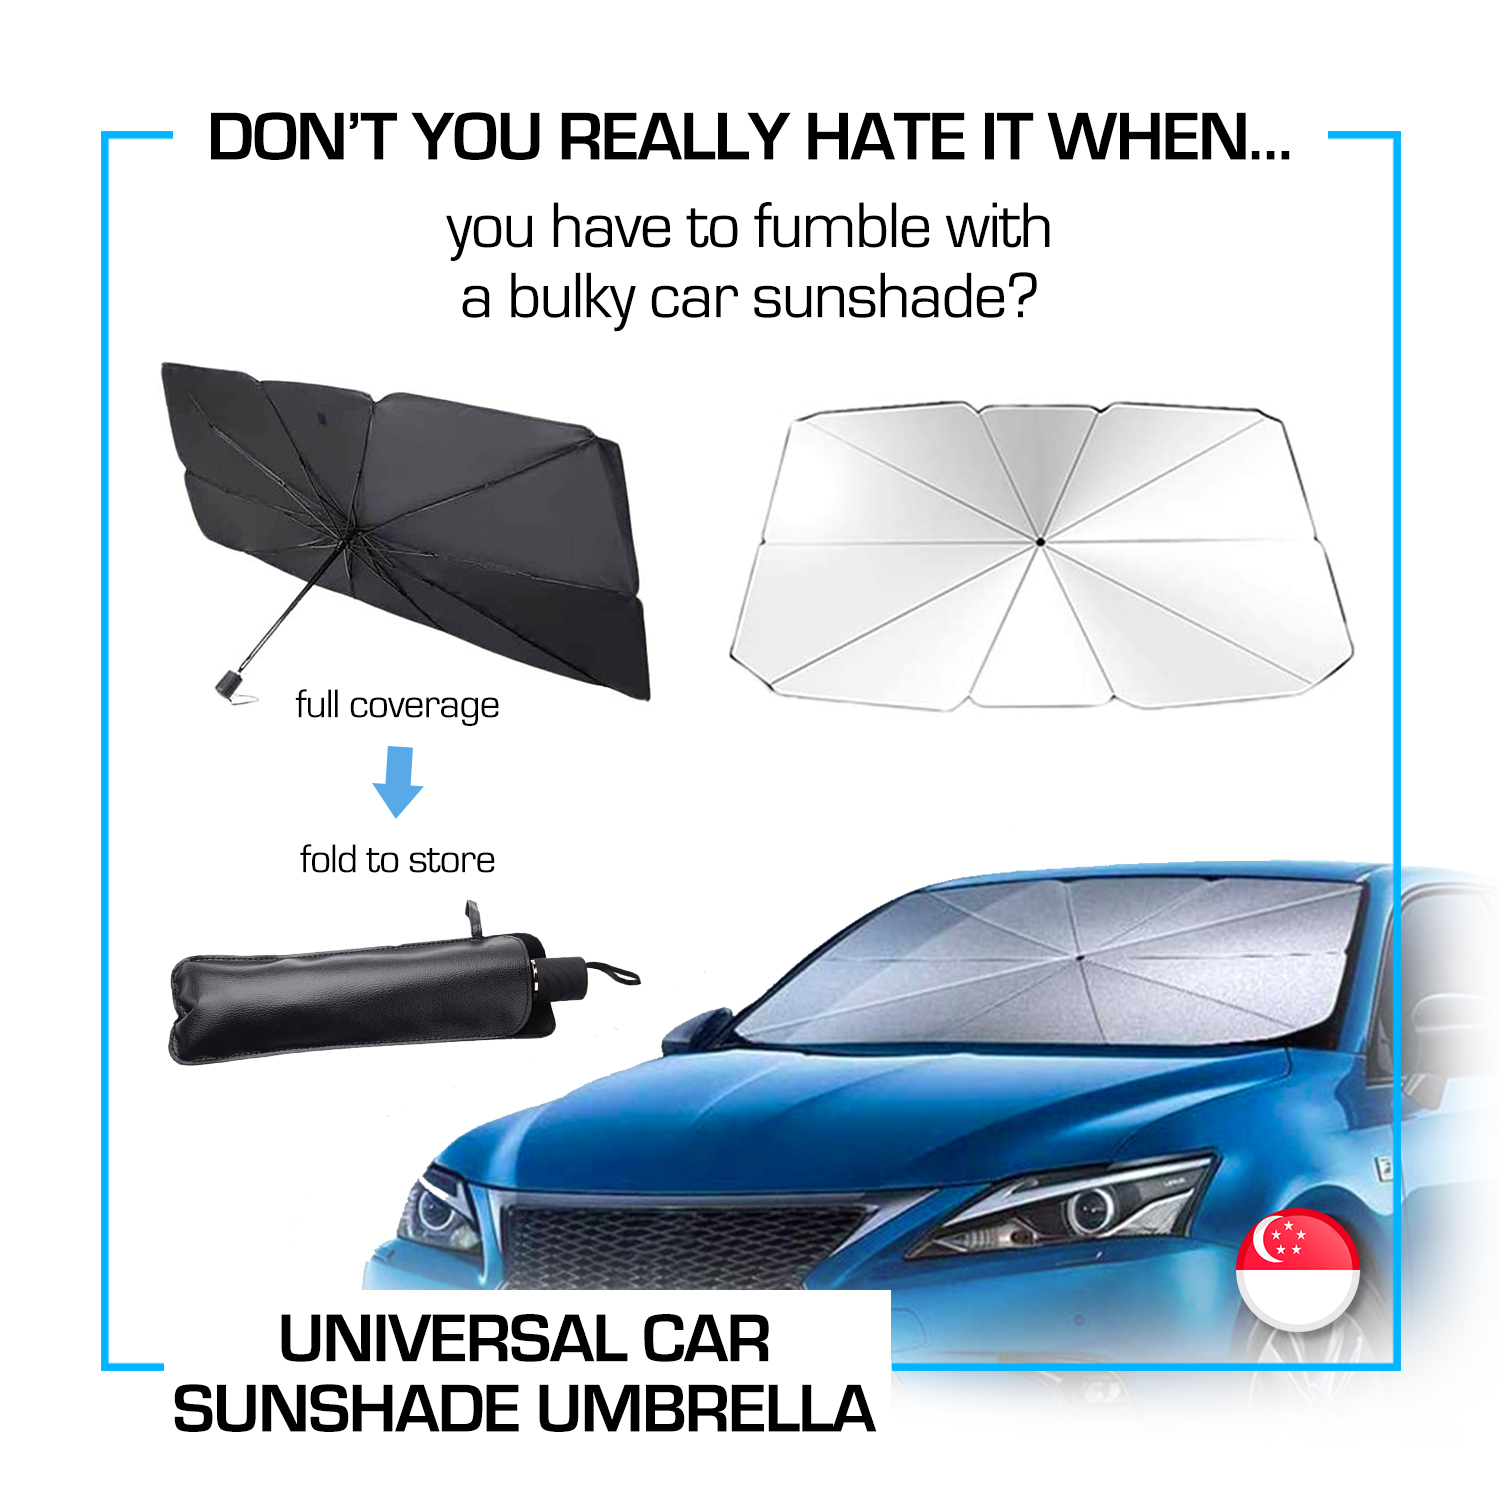 SG] Universal Car Sunshade Umbrella, No installation, Reflective Sunshield  material, Keeps car cool, Block Sun UV on Windshield, Foldable, Compact,  Convenient, Effective